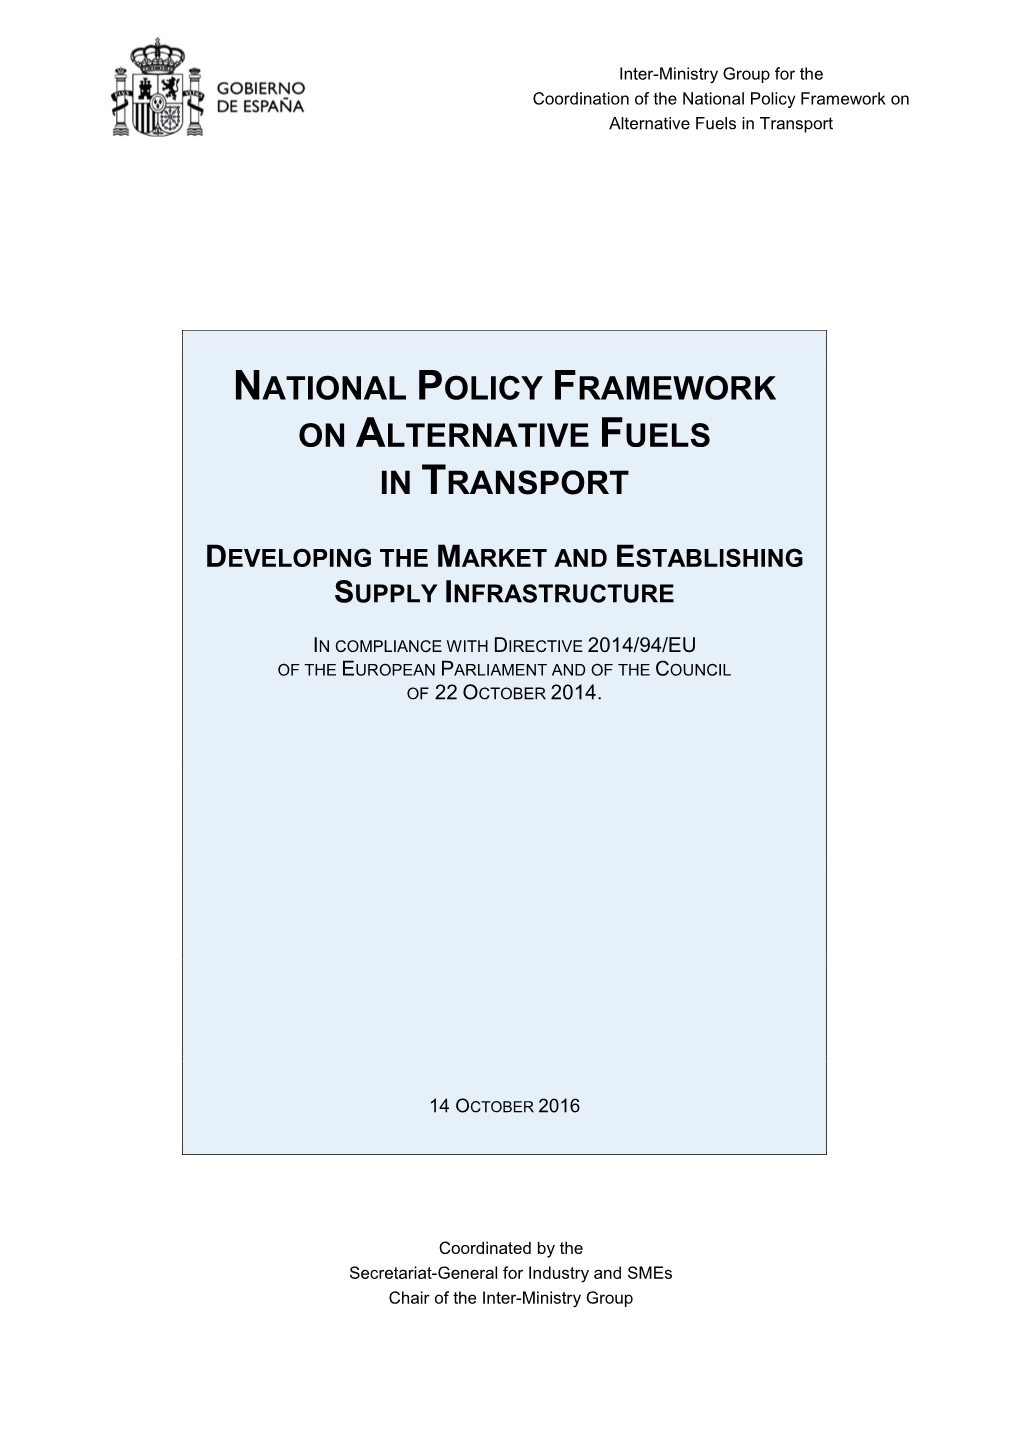 National Policy Framework on Alternative Fuels in Transport